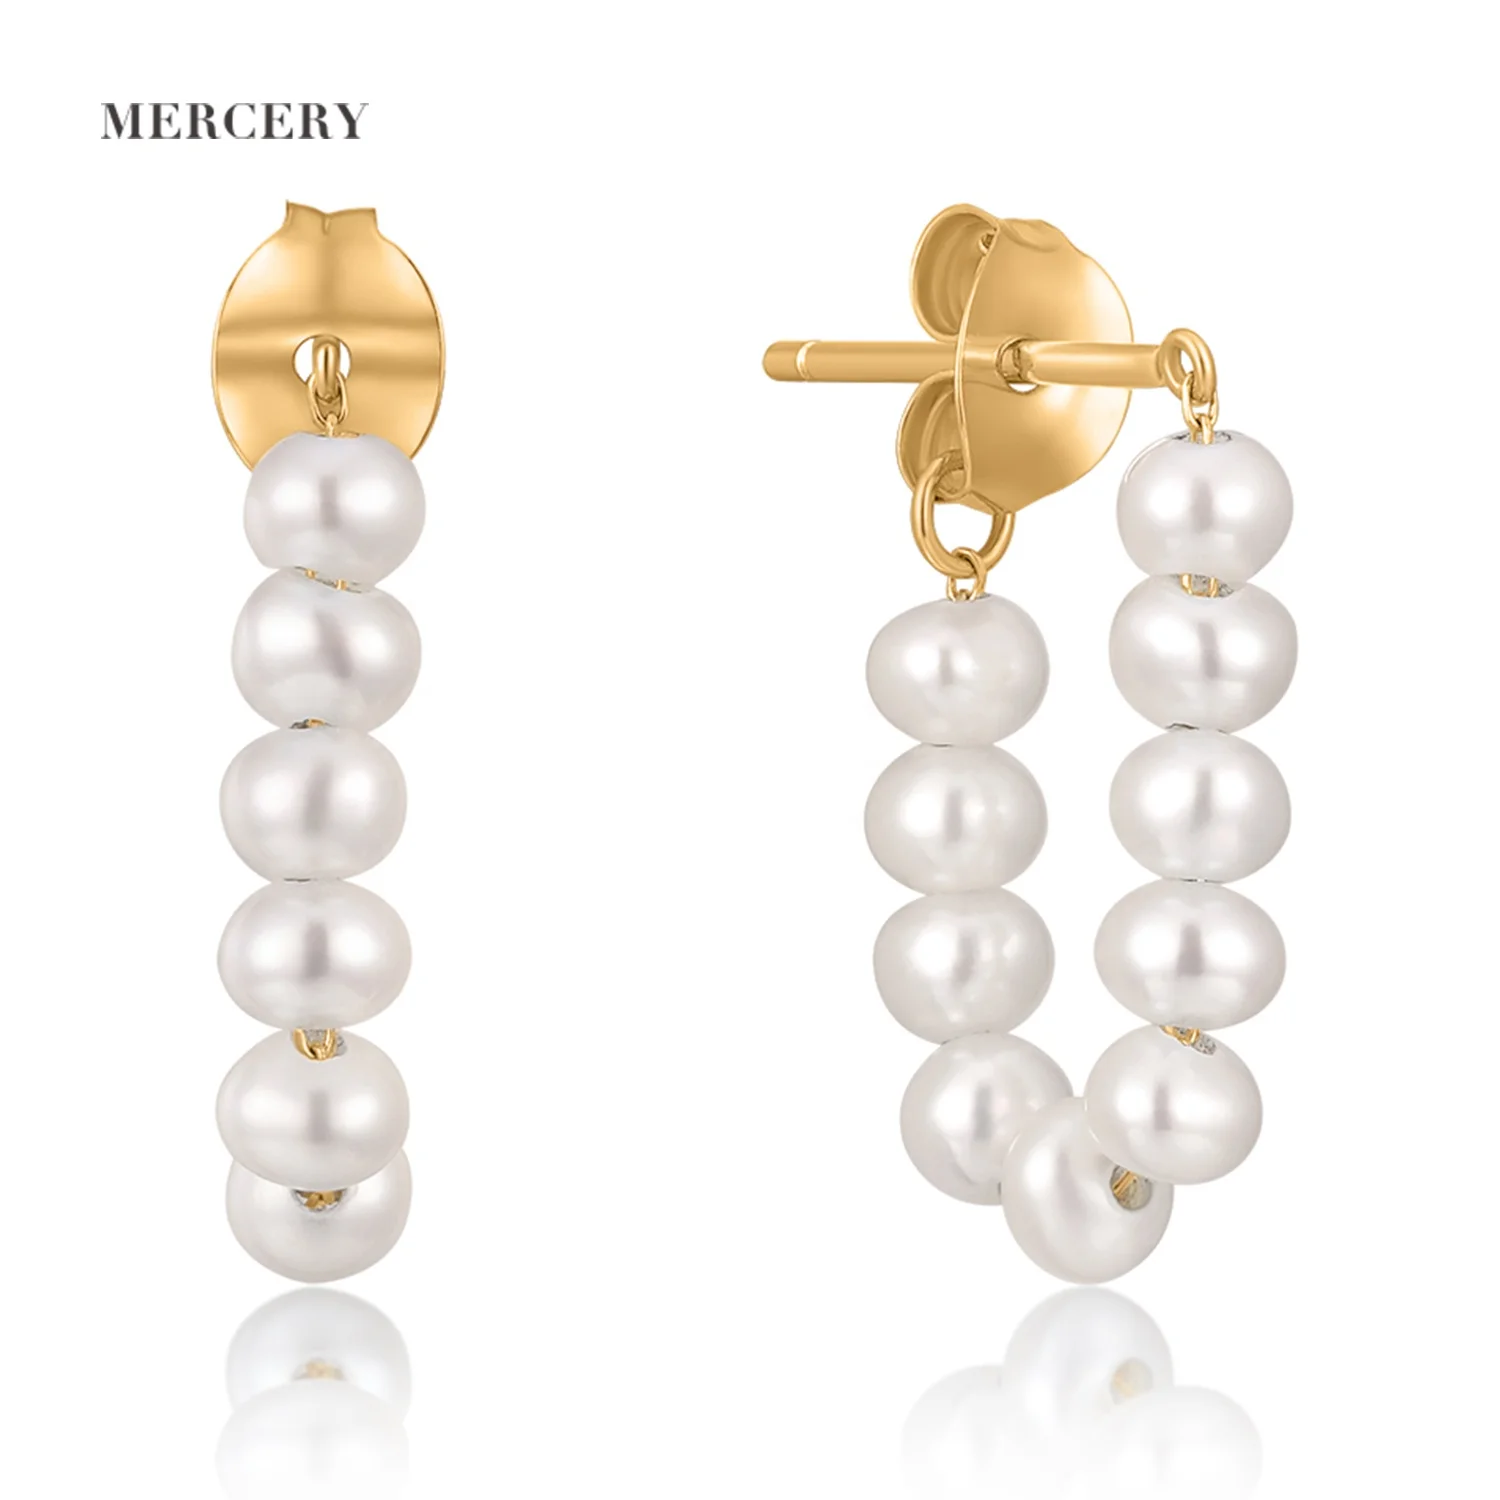 

Mercery Trendy Jewelry White Pearl Earrings Beautifully Designed Freshwater Pearl Stud Earrings 14k Solid Gold Jewelry For Women